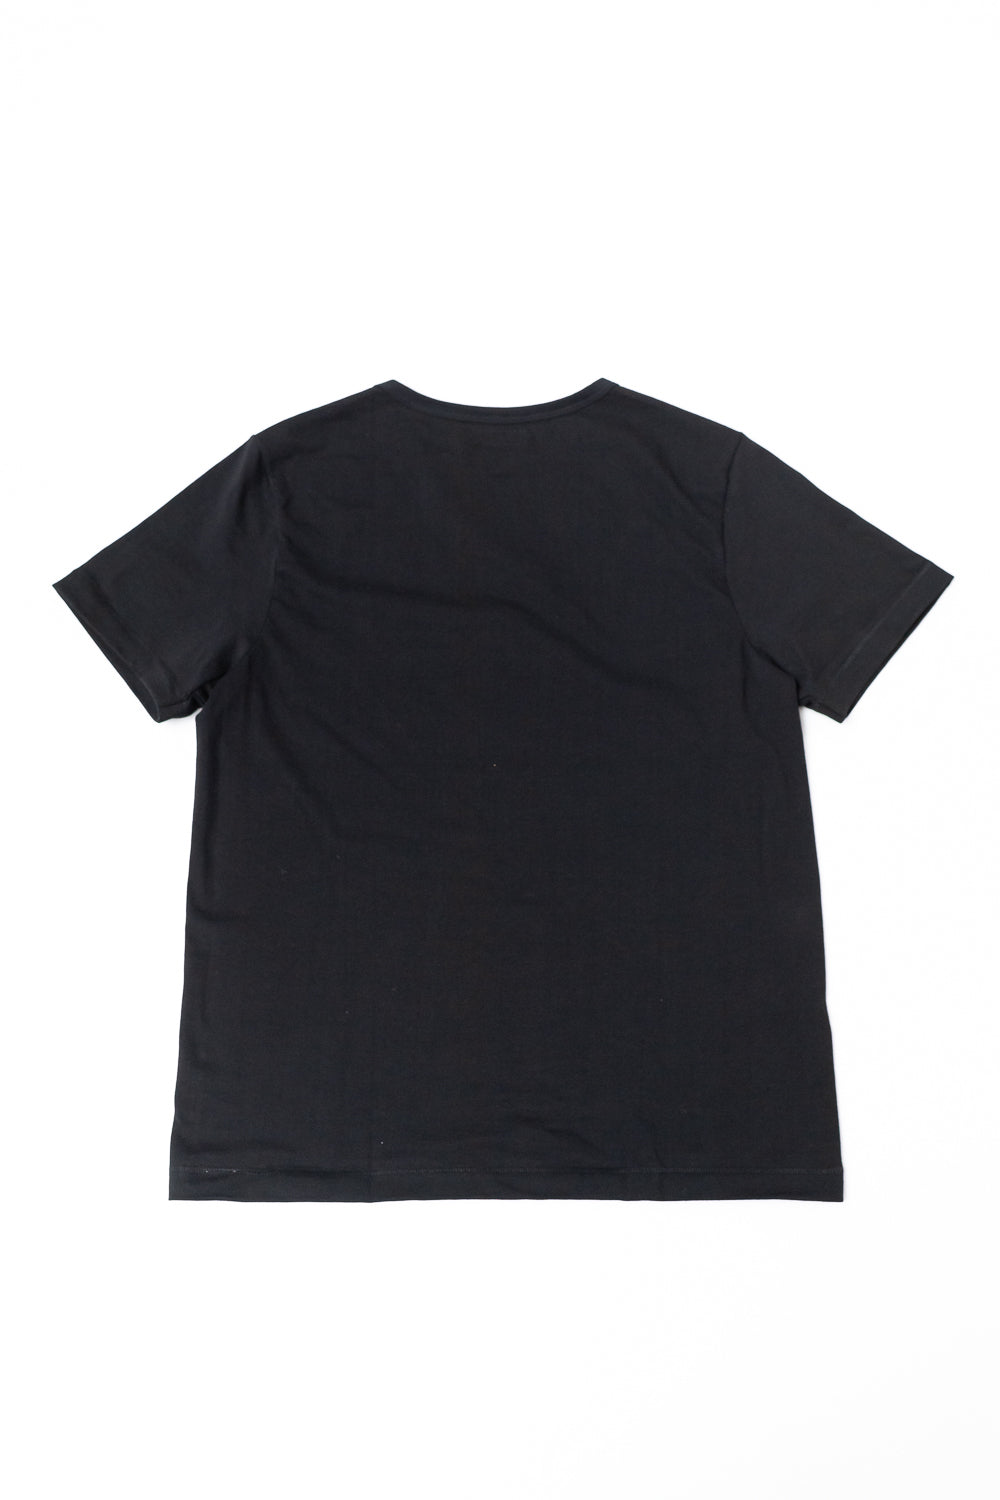 215.99 - 8.6oz Loopwheeled T-Shirt Classic Fit - Deep Black